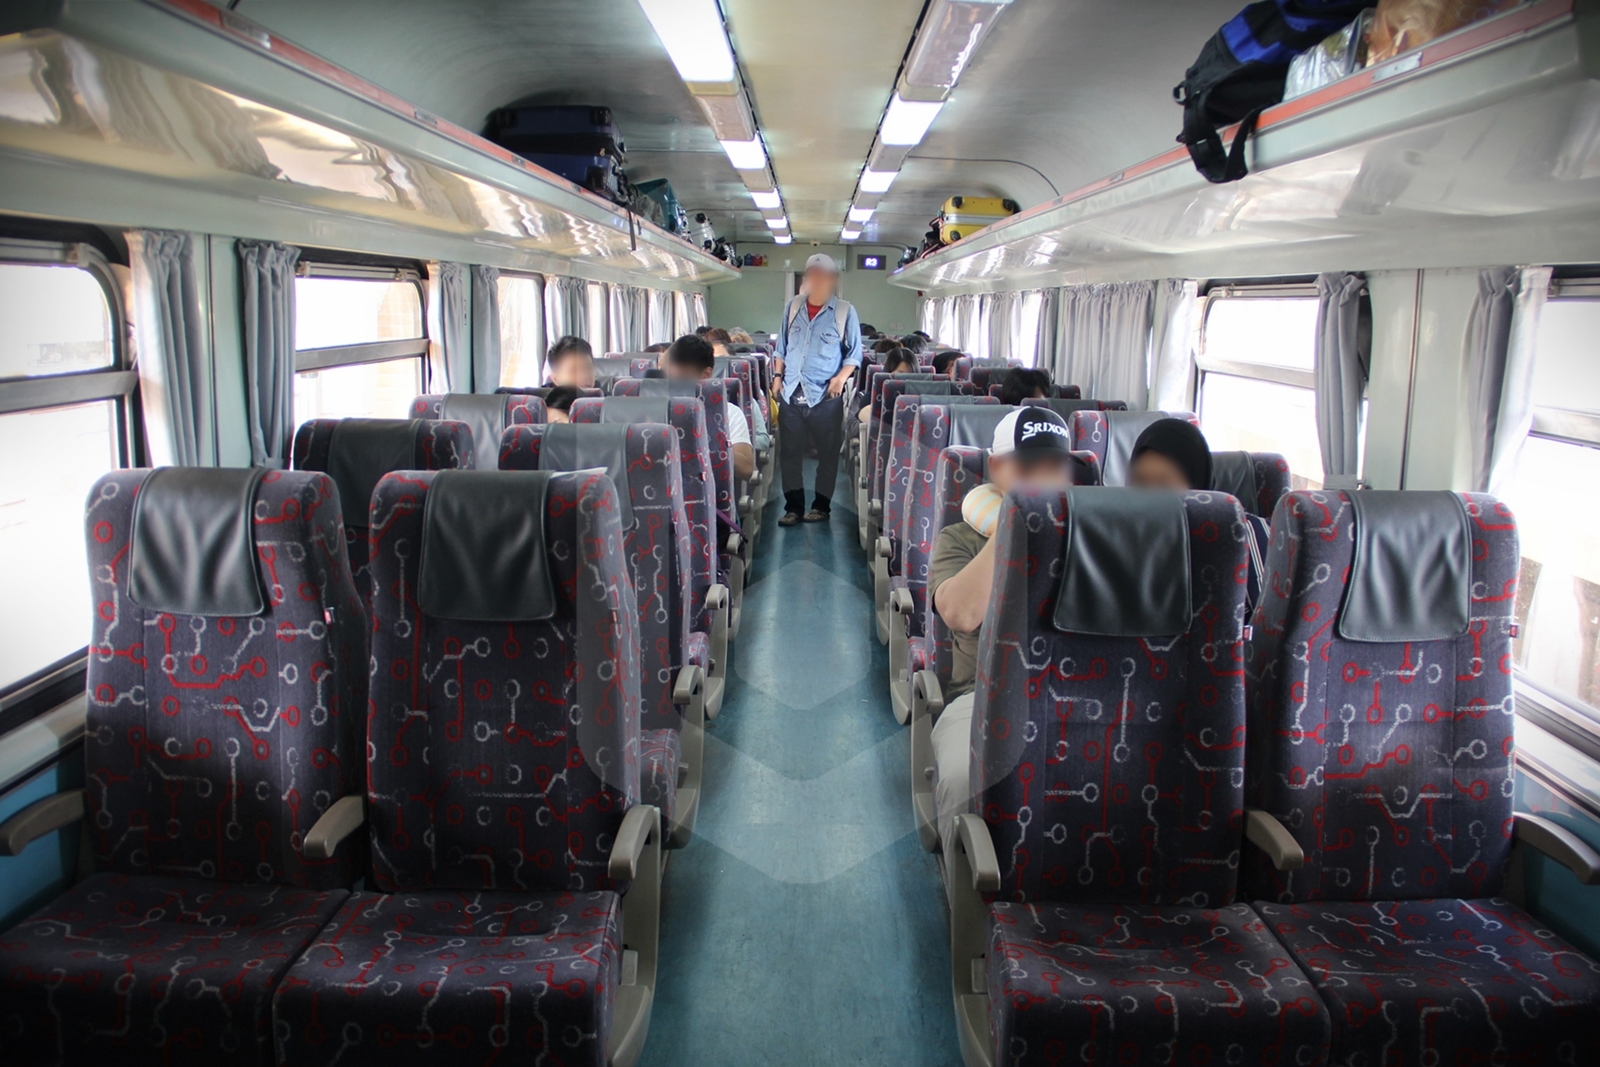 Gemas to Johor Bahru by train